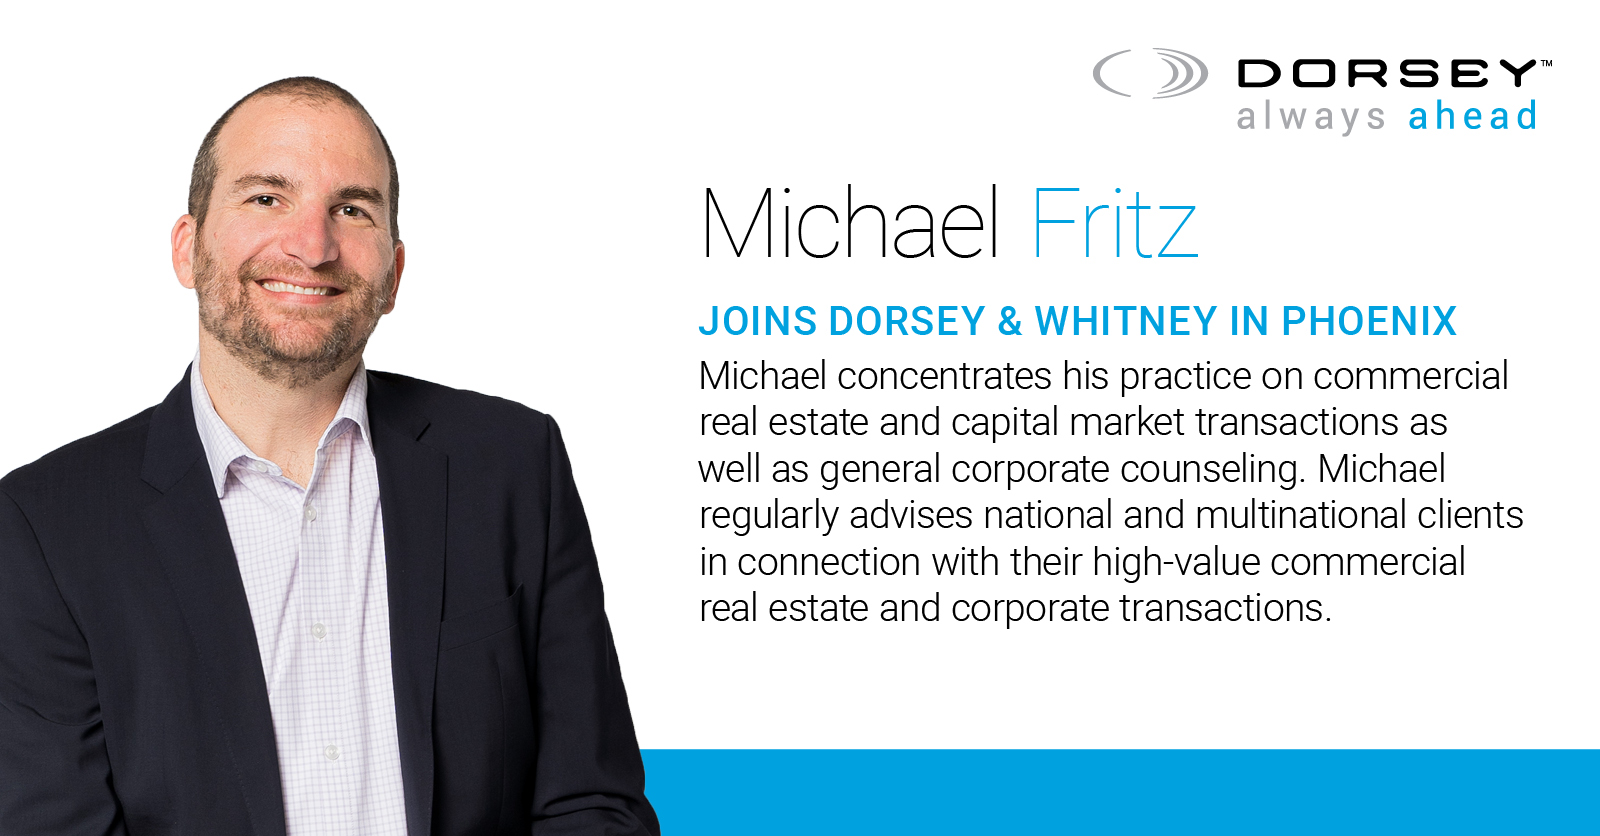 Michael Fritz Joins Dorsey